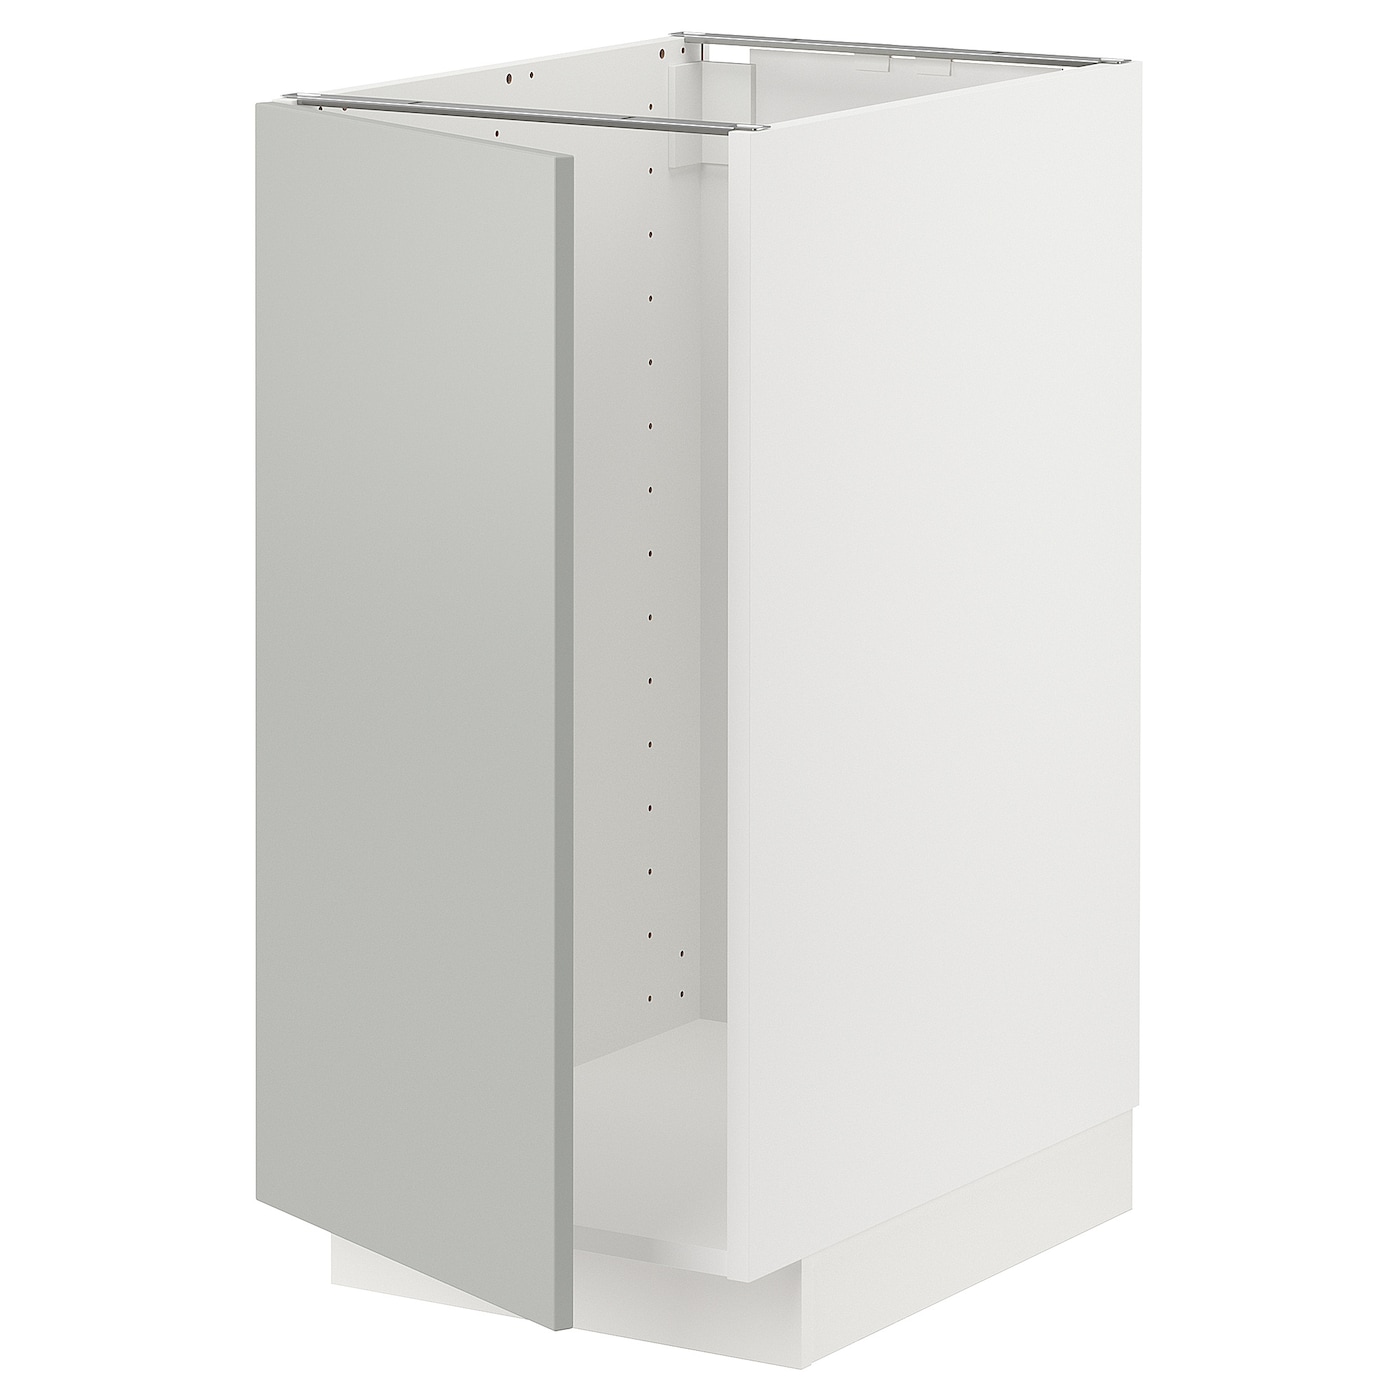 Напольный шкаф - METOD IKEA/ МЕТОД ИКЕА,  88х40  см, белый/светло-серый